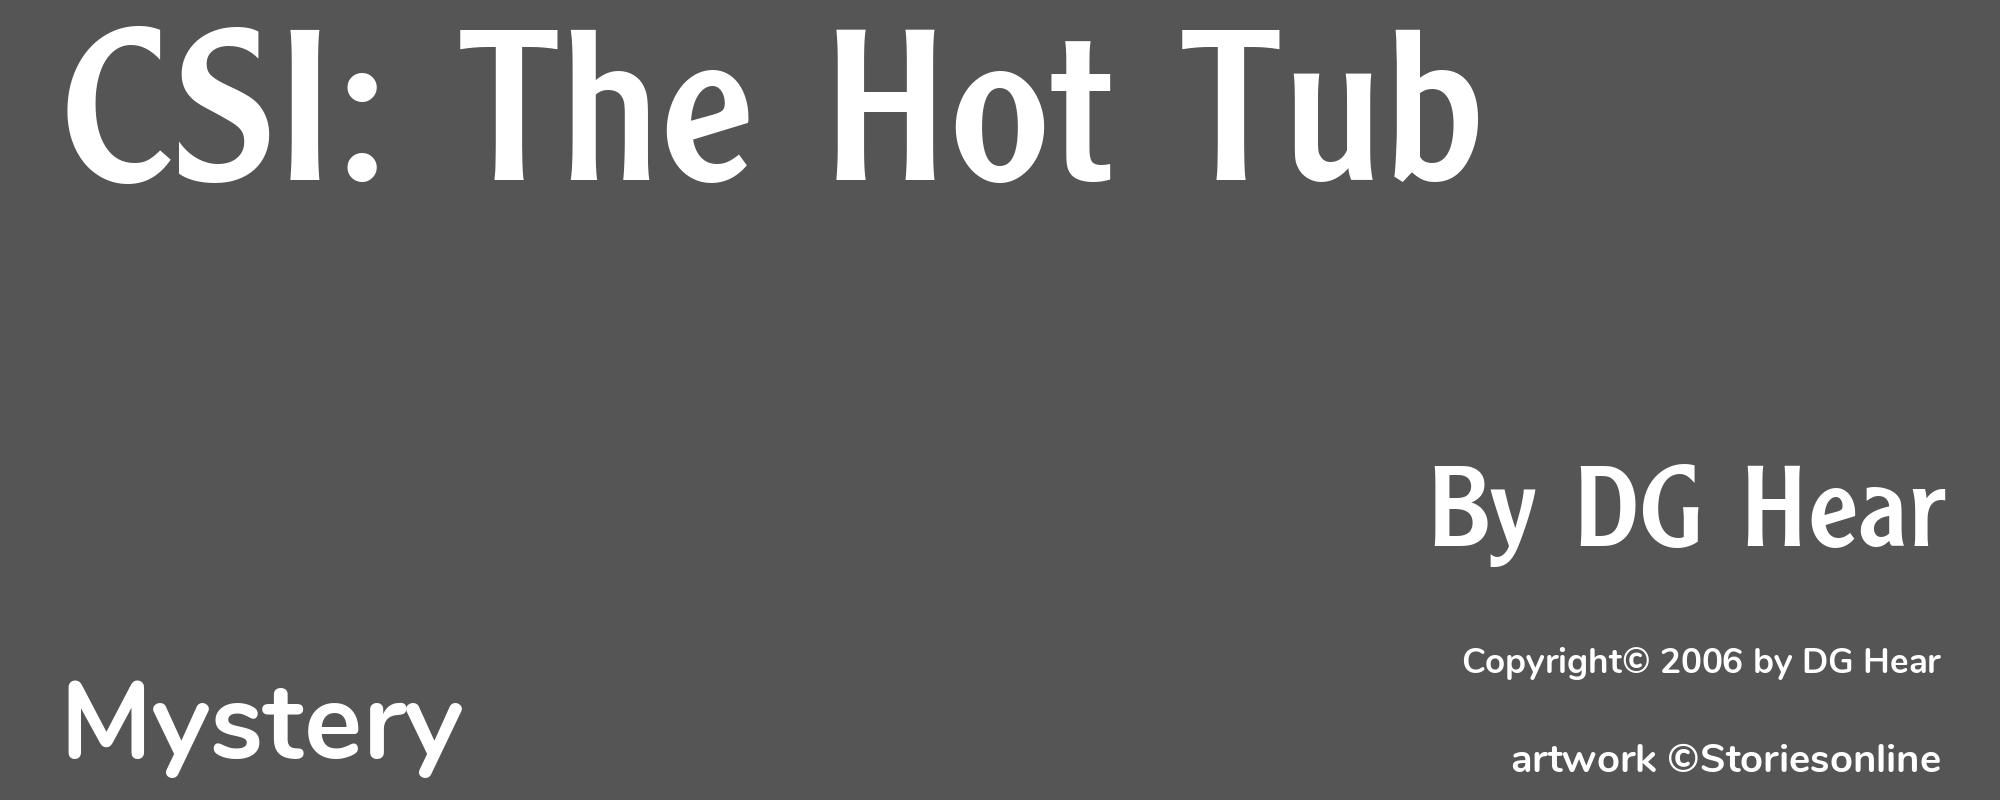 CSI: The Hot Tub - Cover